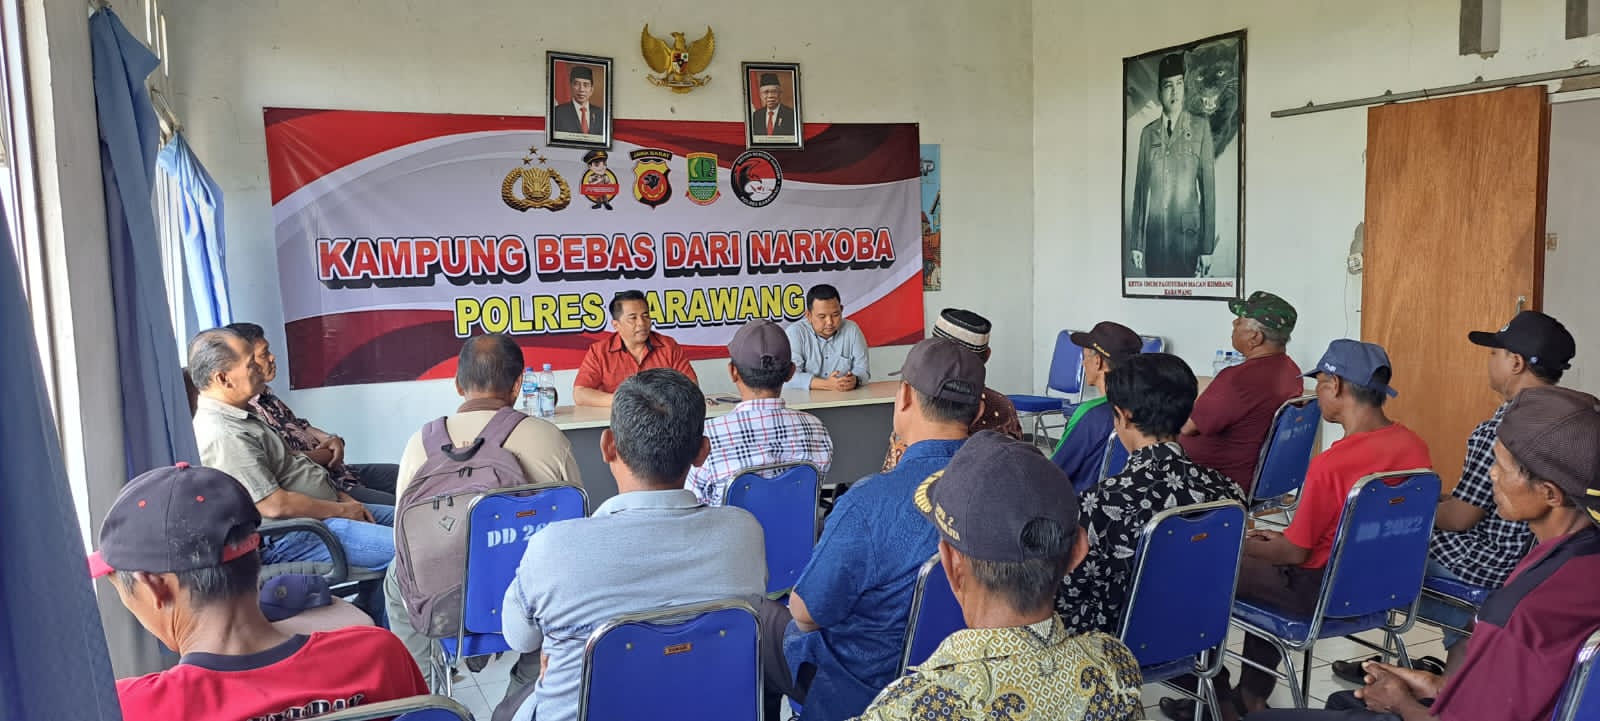 Kasat Narkoba Polres Karawang AKP Arief Zaenal Abidin Sosialisasi Kepada Masyarakat